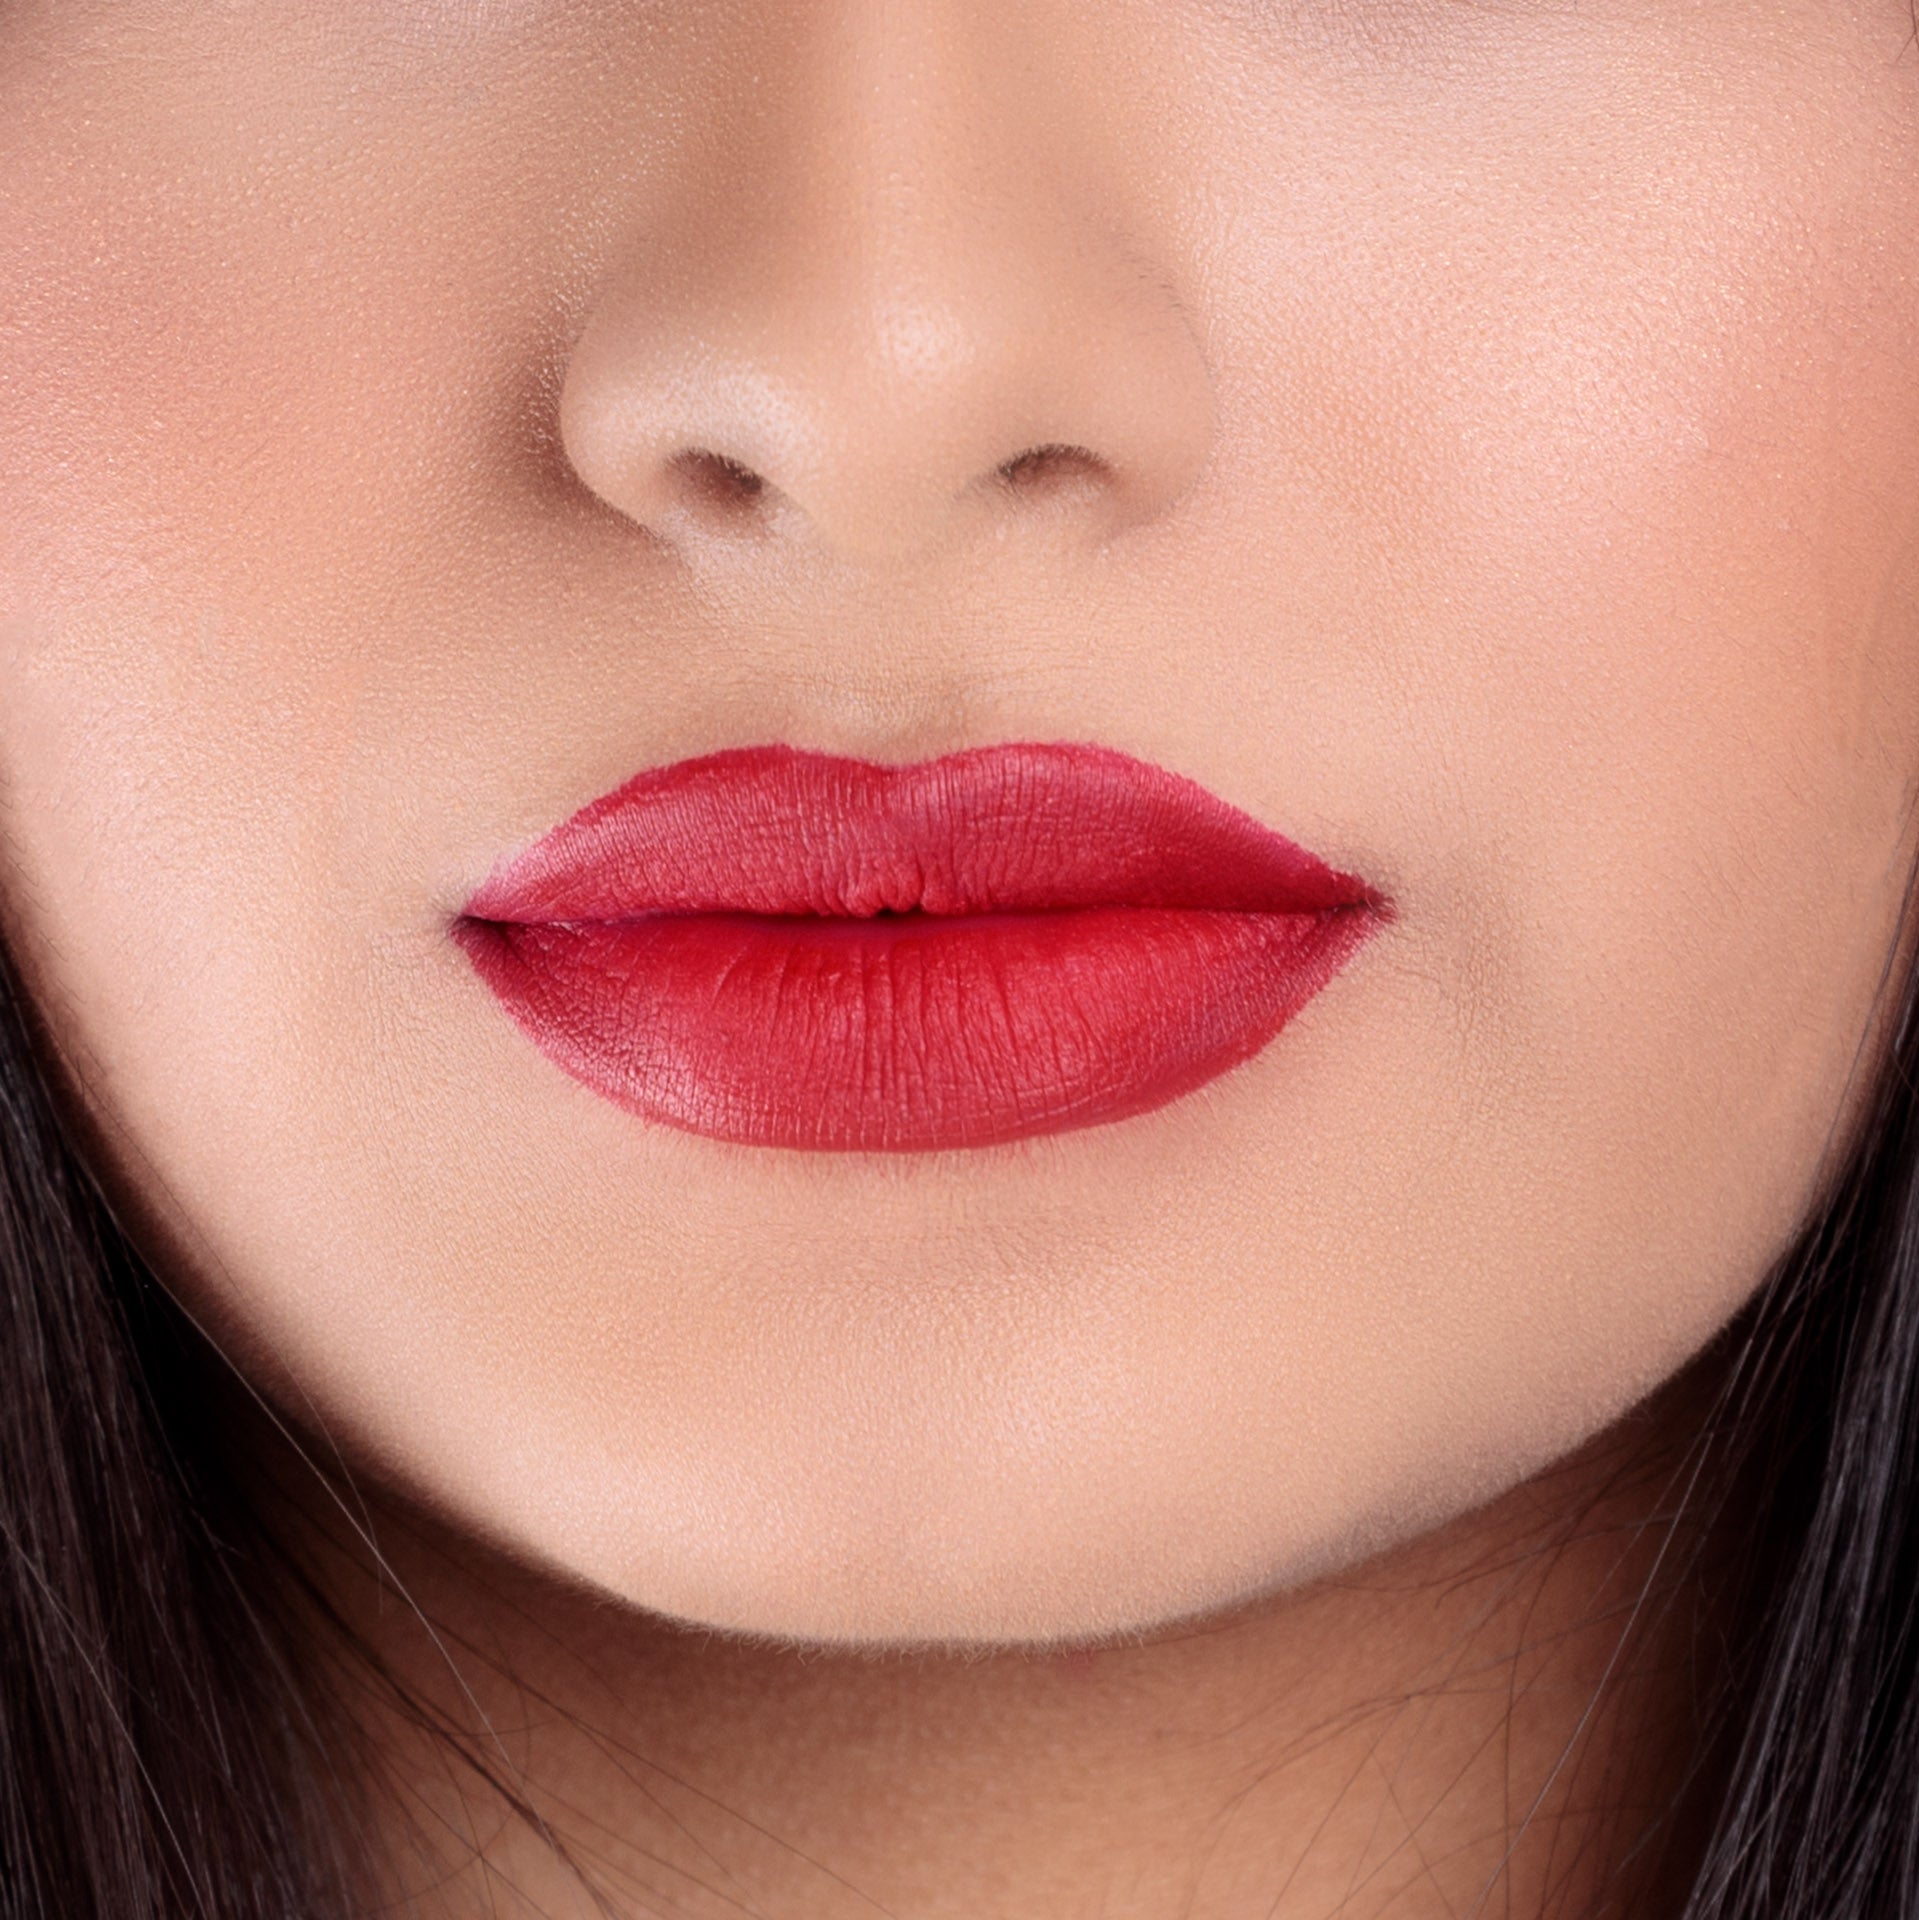 Closeup of Girls lips wearing LIPSAX in Climax